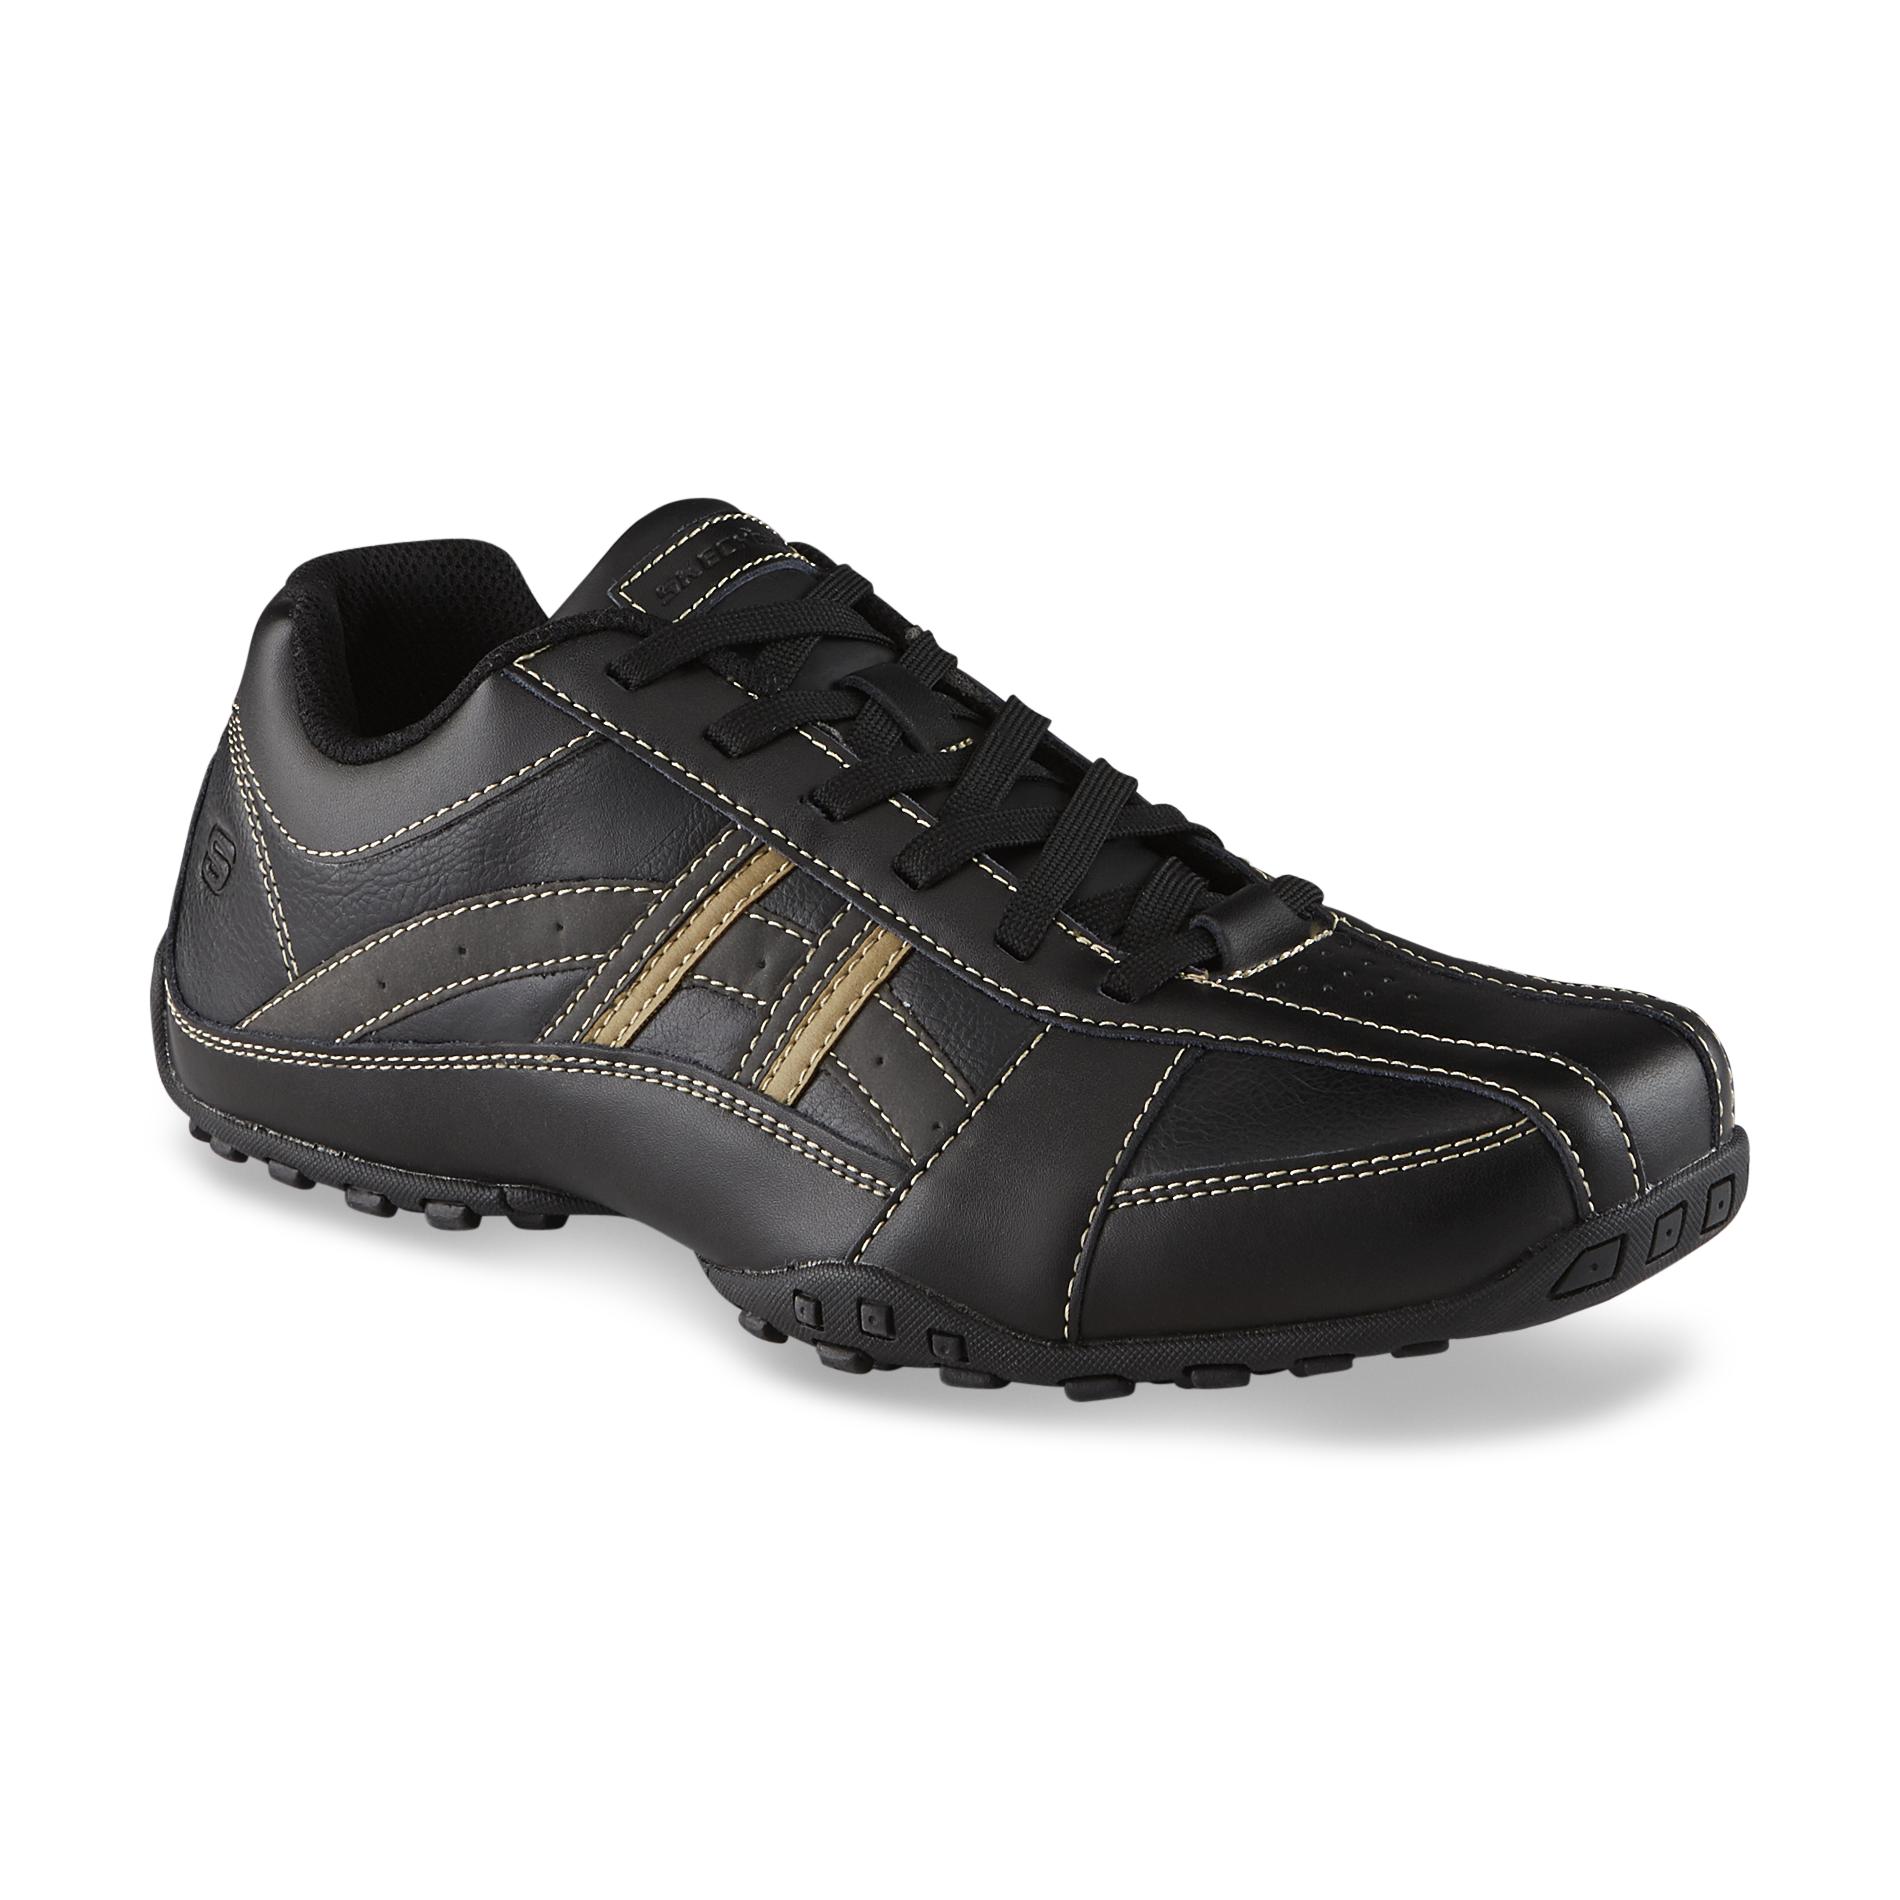 Skechers Men's Malton Black Memory Foam Oxford Shoe - Clothing, Shoes ...